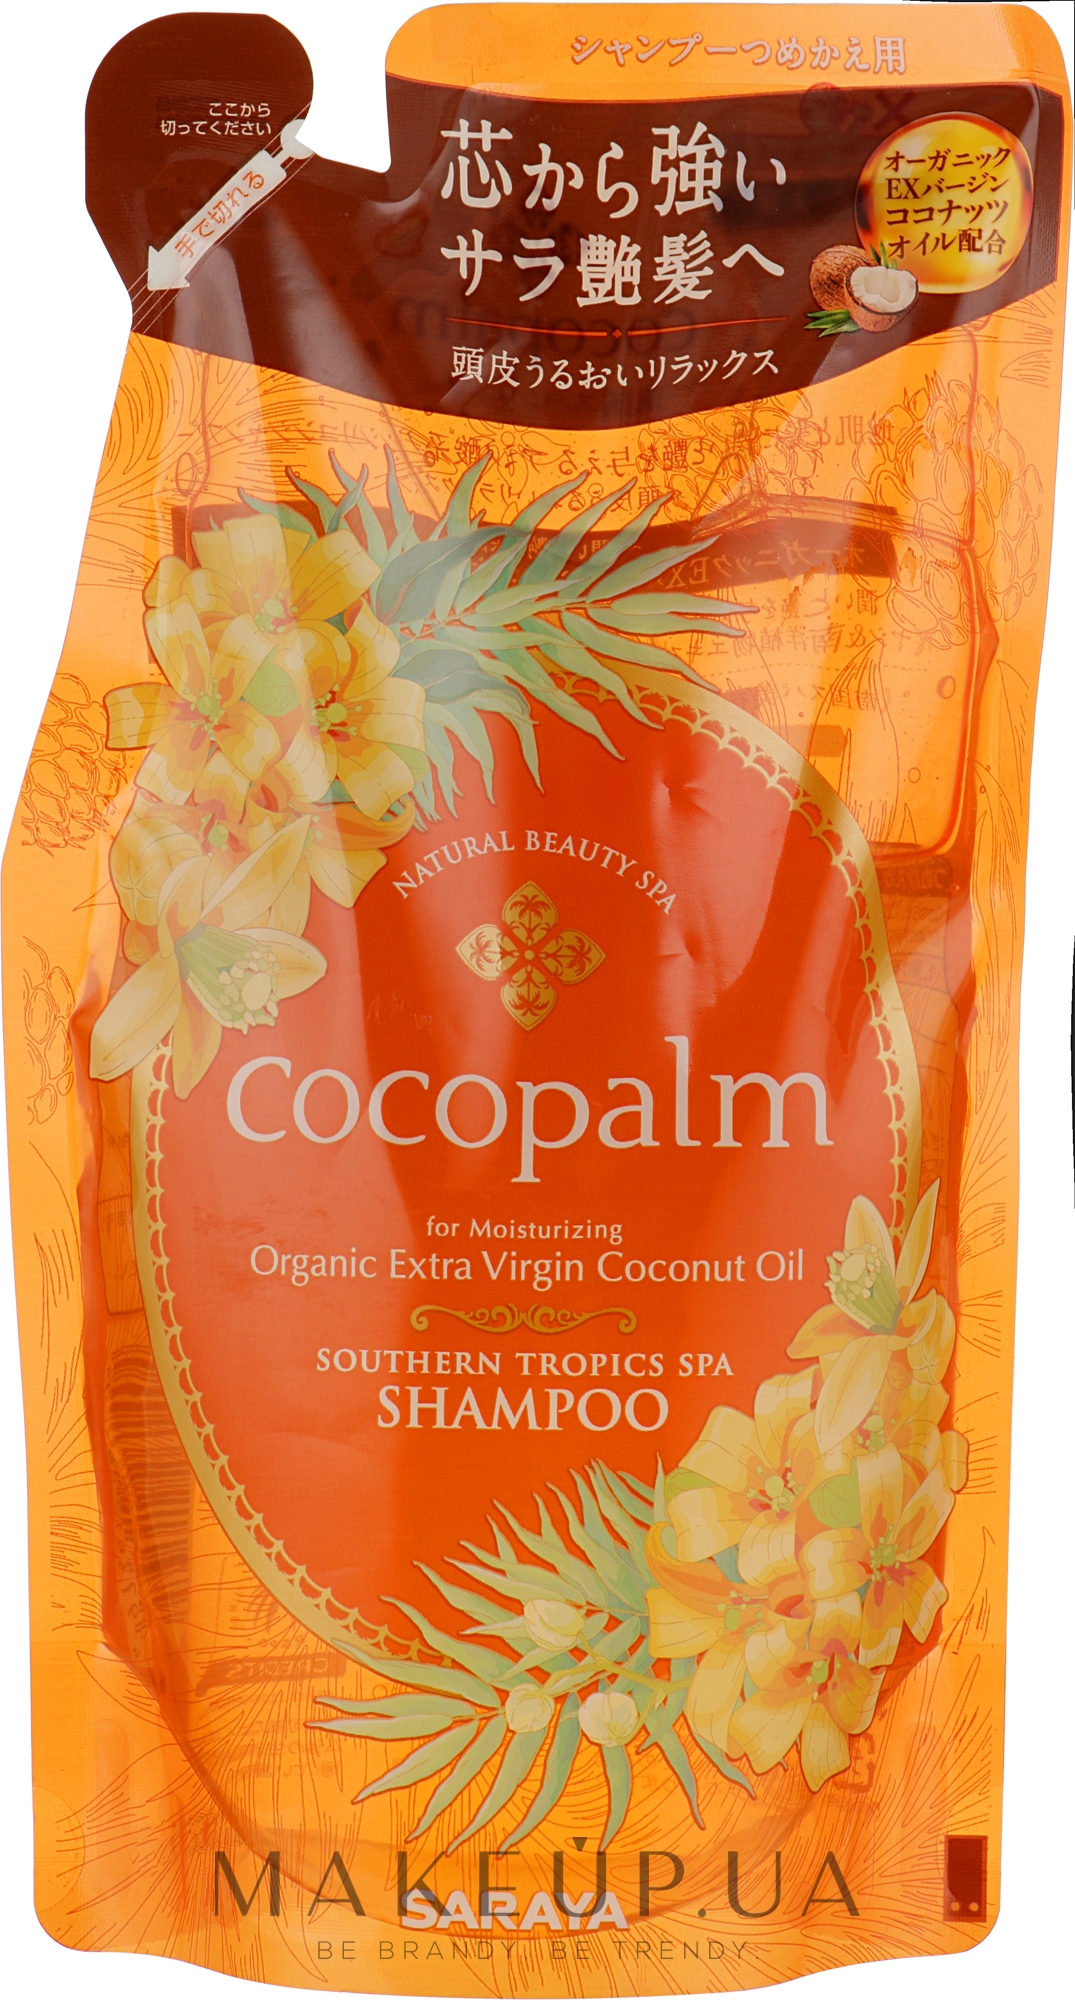 Спа-шампунь для волос - Cocopalm Natural Beauty SPA Southern Tropics Spa Shampoo (сменный блок) — фото 380ml